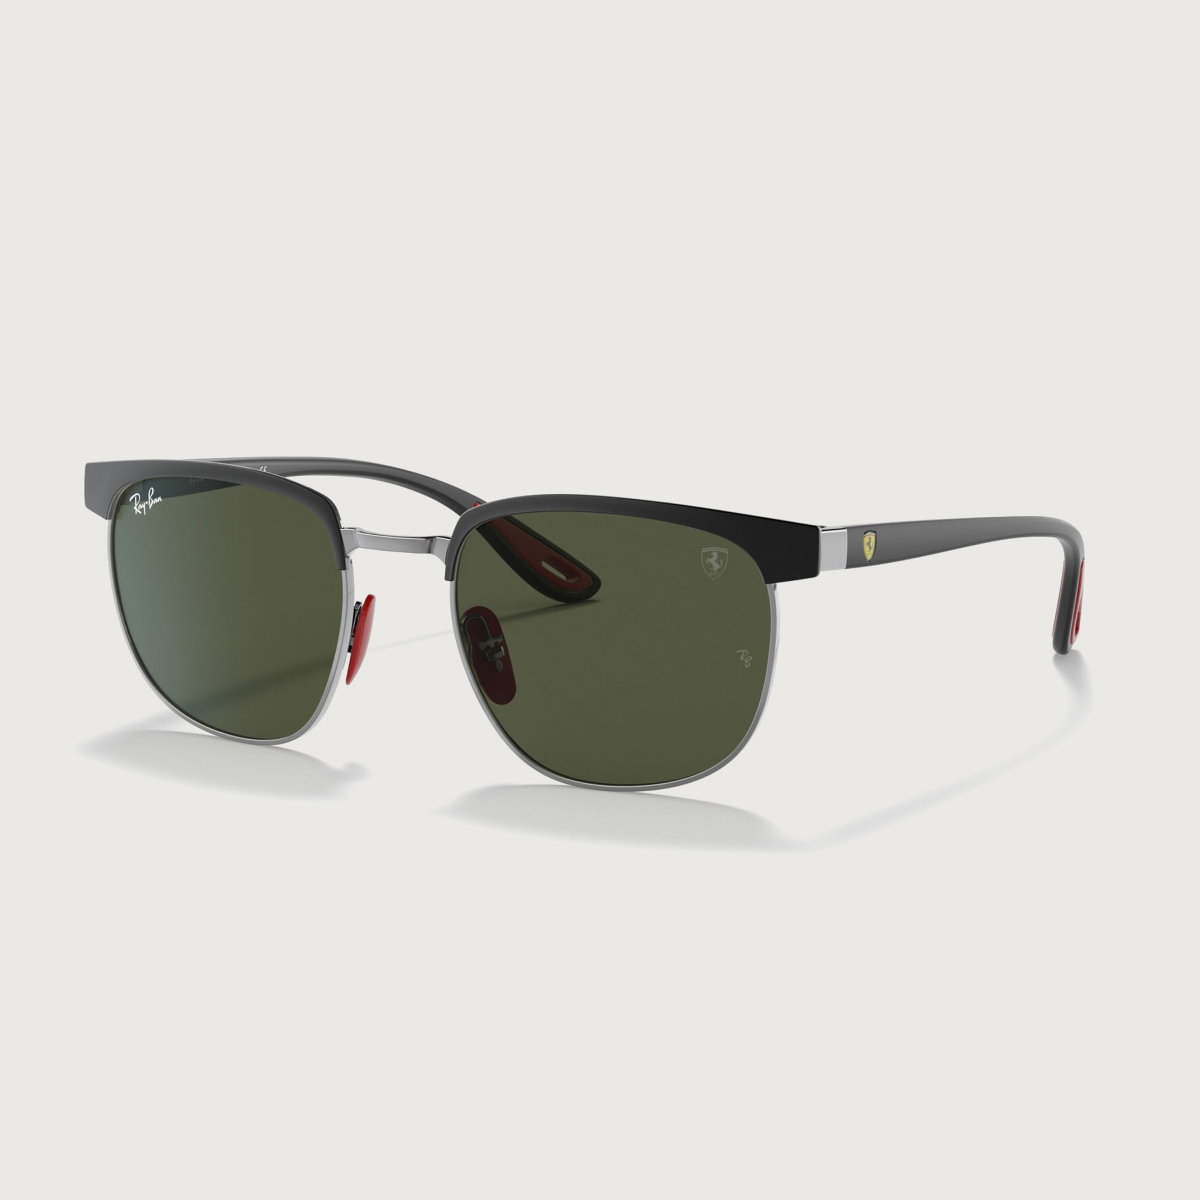 Black and gunmetal Ray-Ban for Scuderia Ferrari sunglasses with dark green lenses